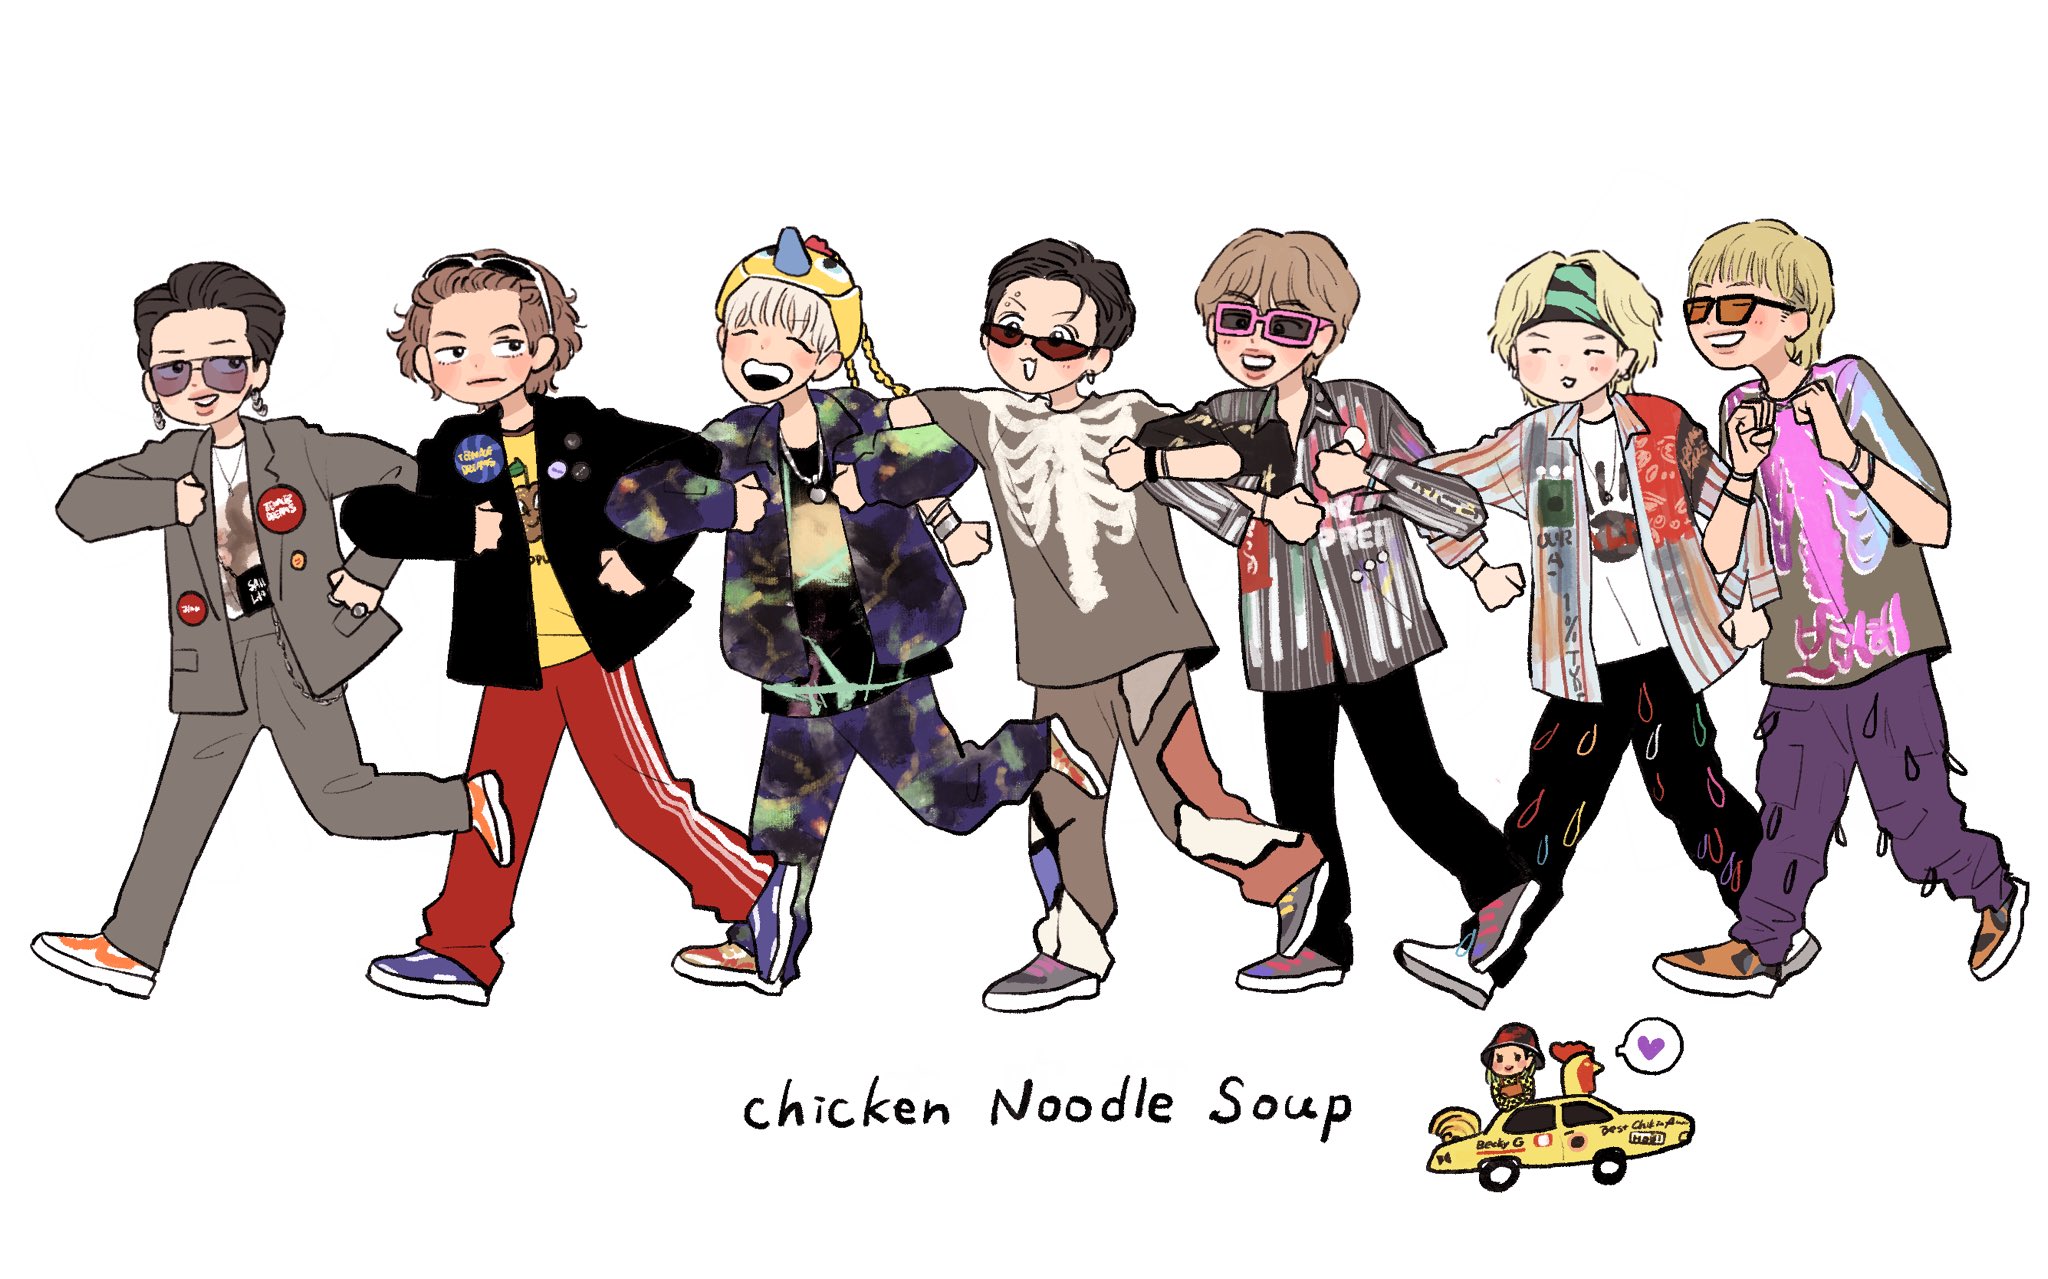 Ин суп бтс 1. Sowoozoo BTS 2021. BTS концерт sowoozoo. BTS Chicken Noodle Soup концерт. BTS - Chicken Noodle Soup sowoozoo.